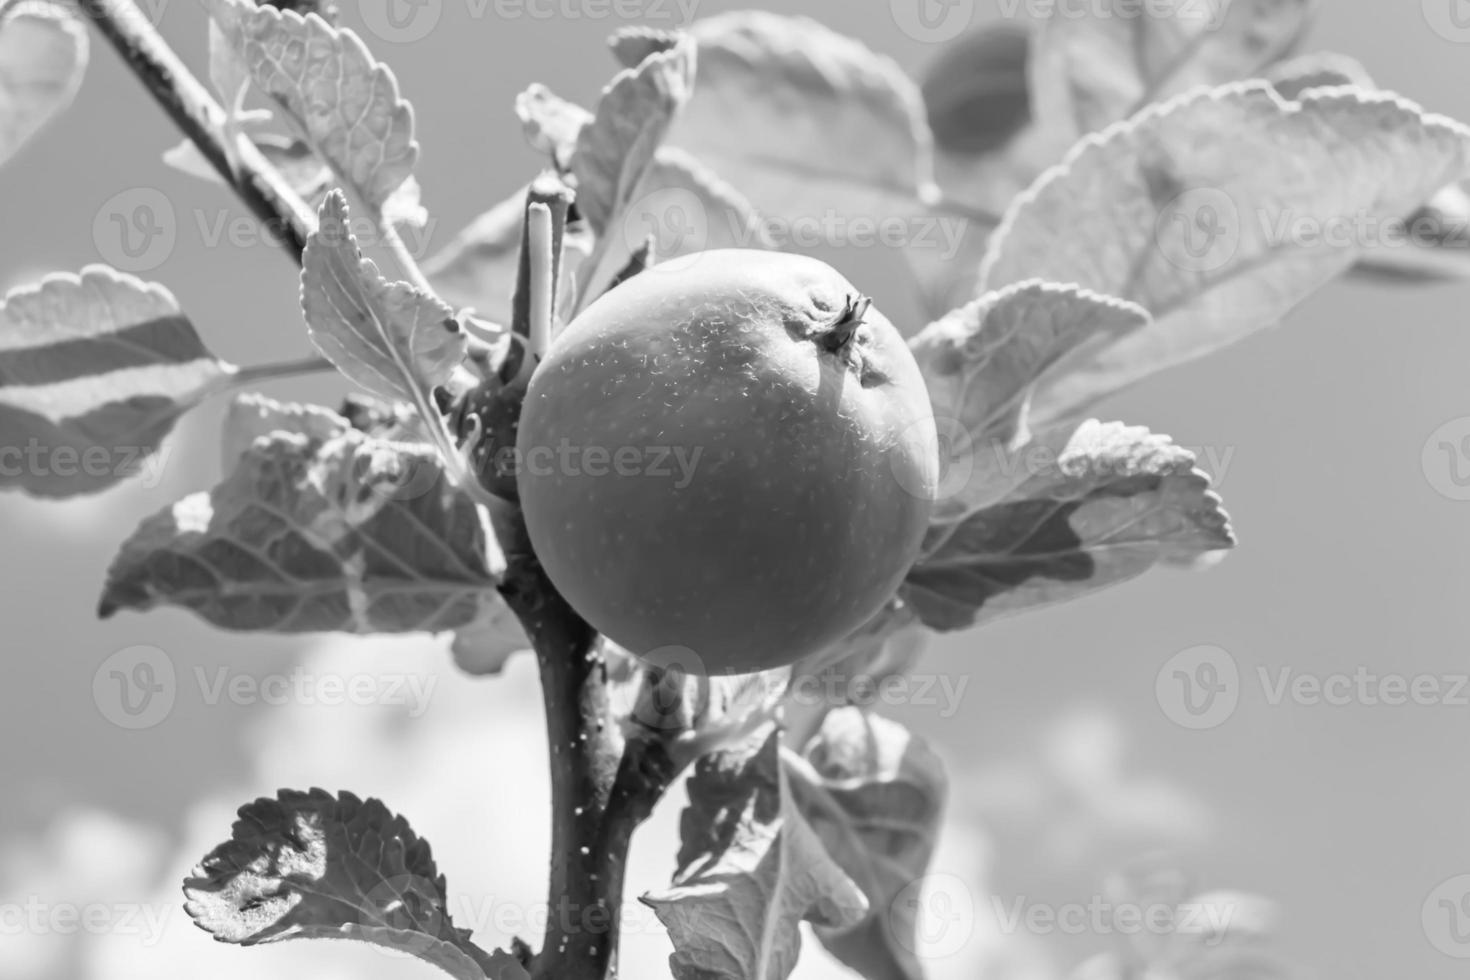 fotografie op thema mooie fruittak appelboom foto